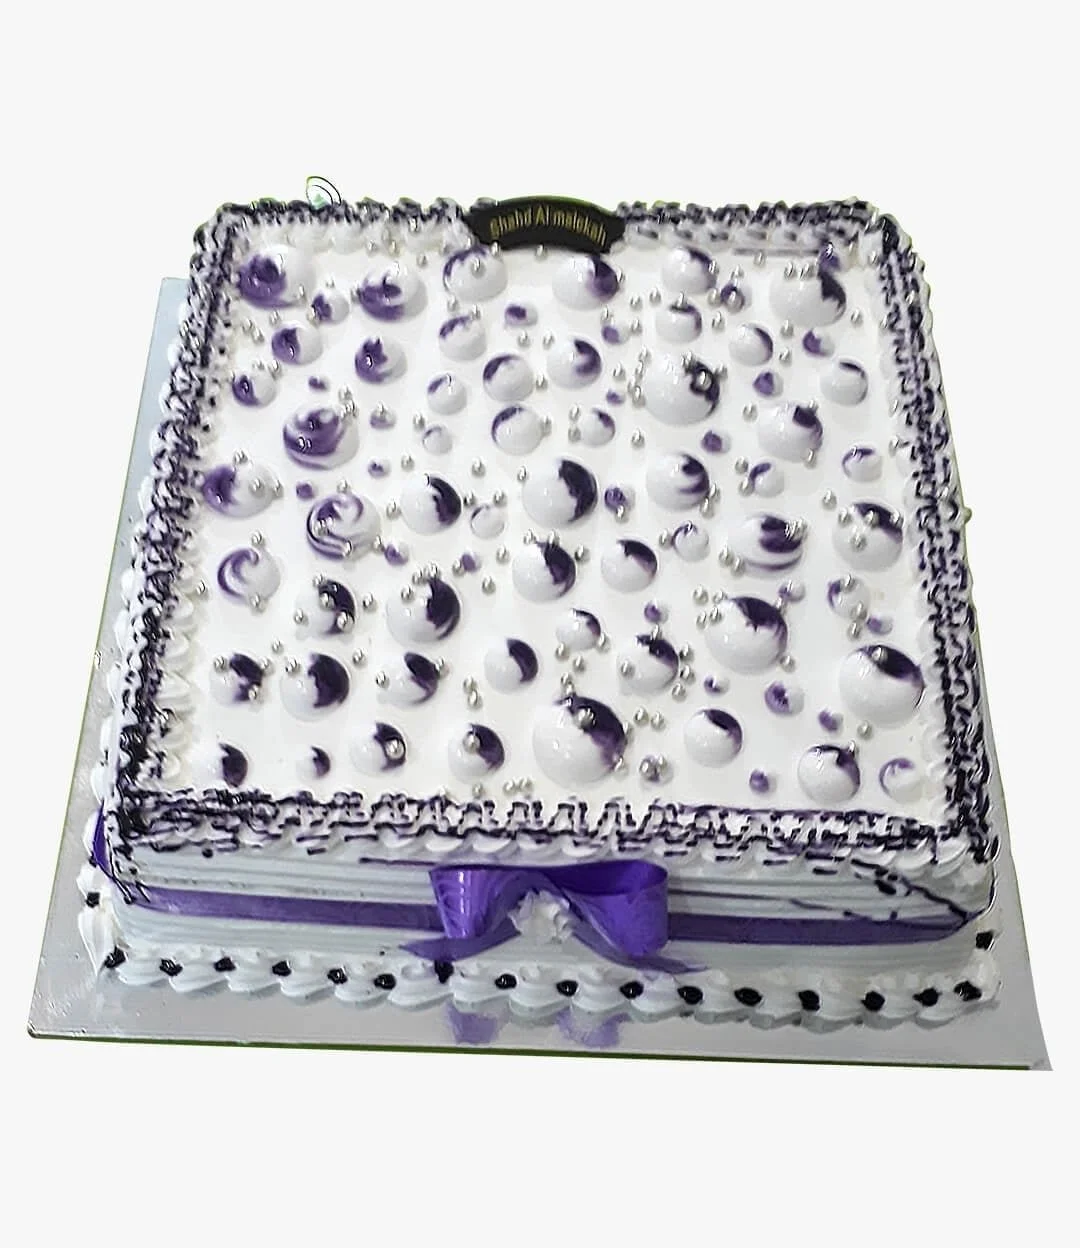 Square Chocolate/Vanilla Cake with White & Purple Cream